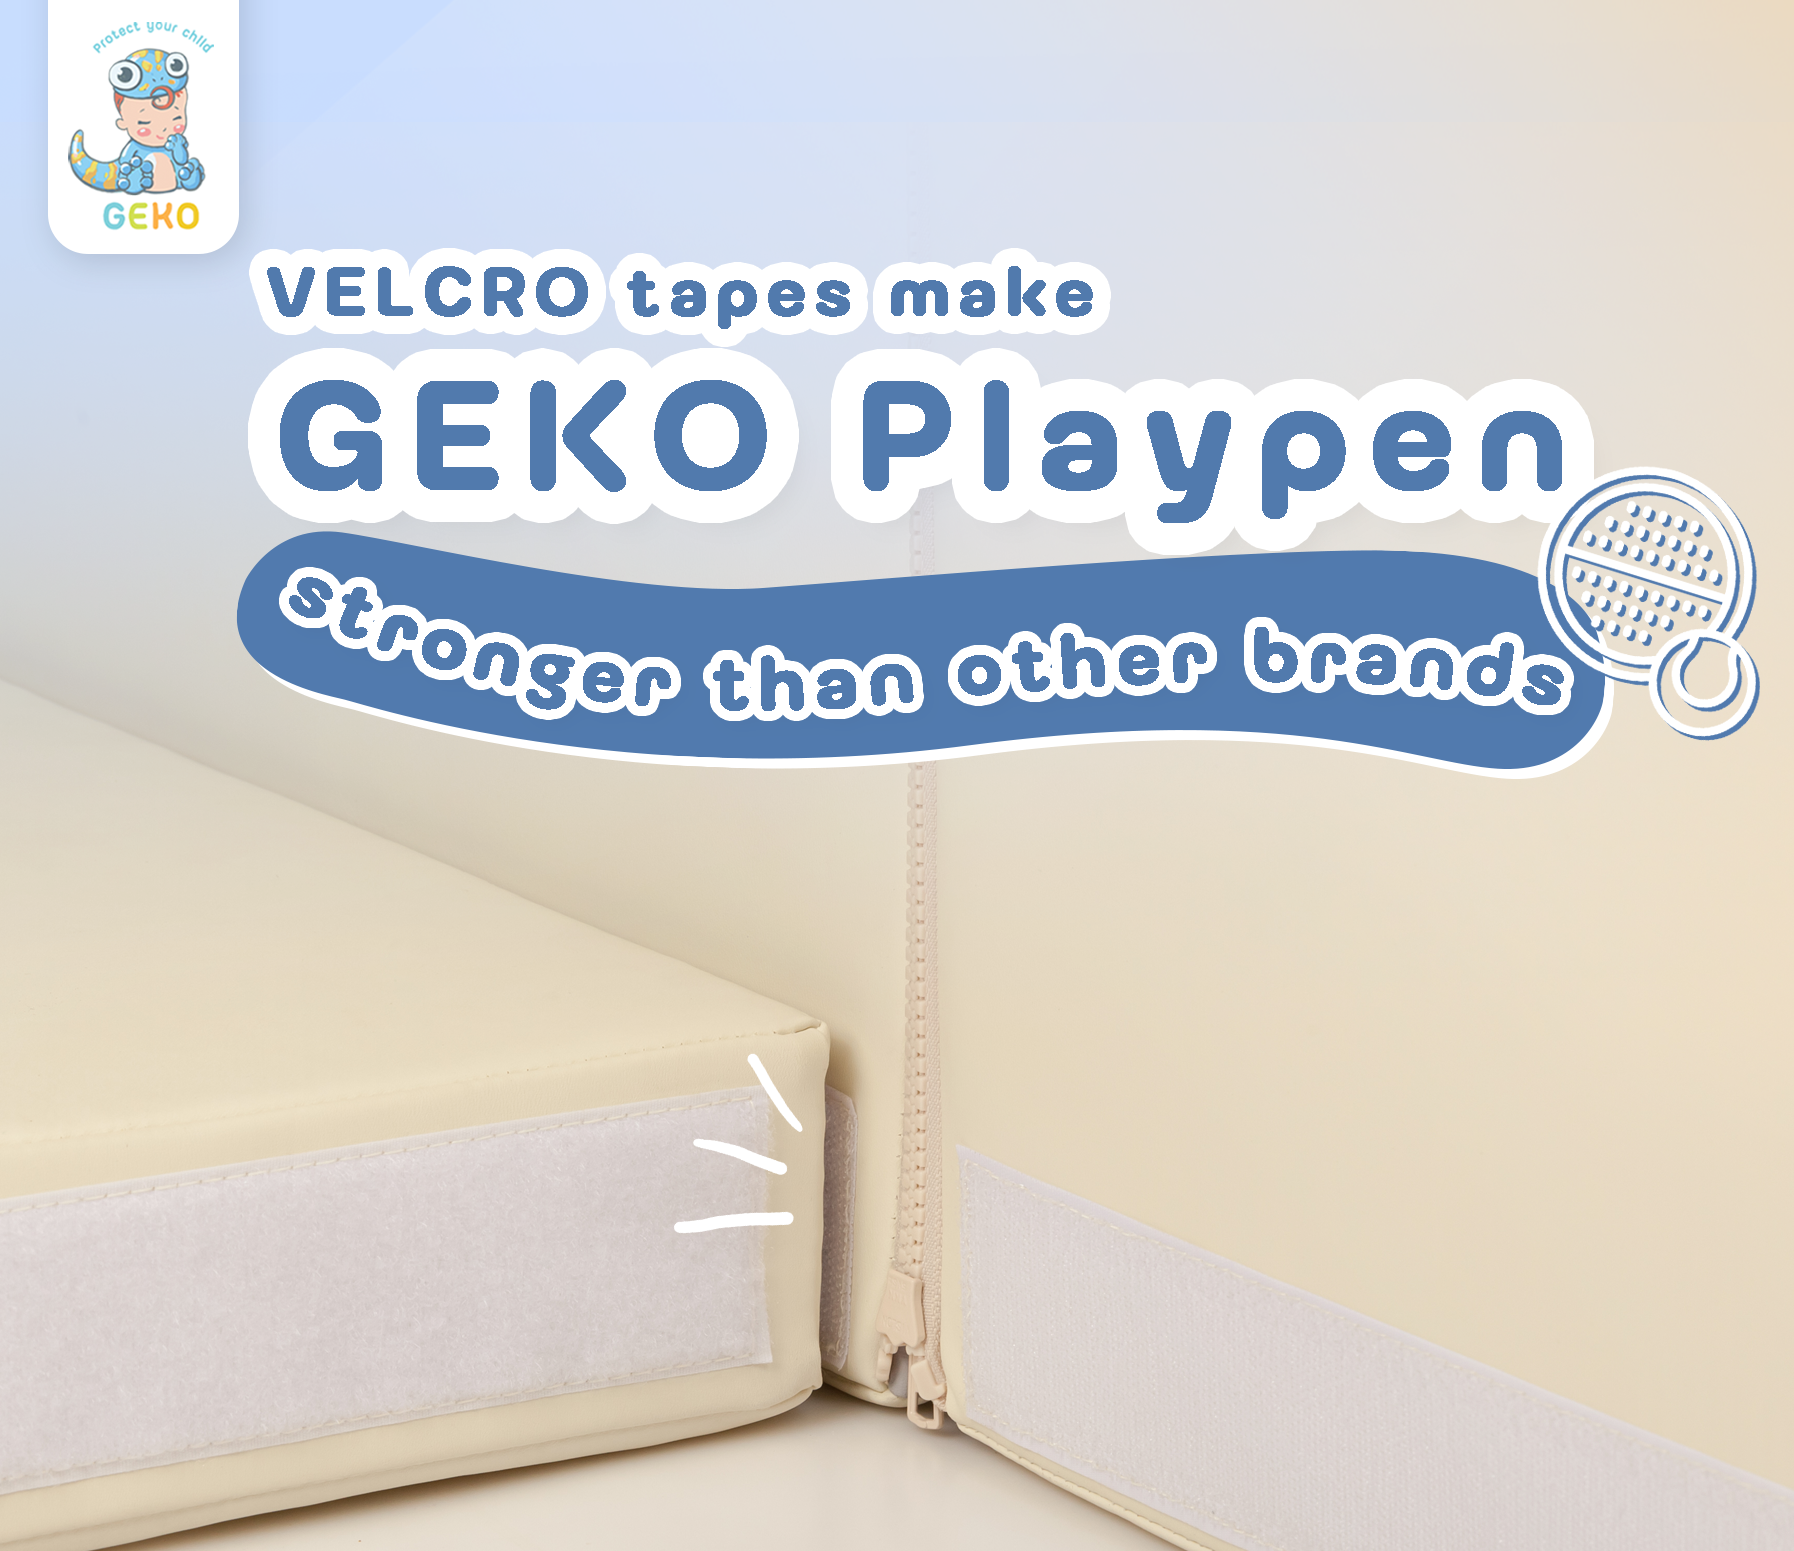 Velcro tape